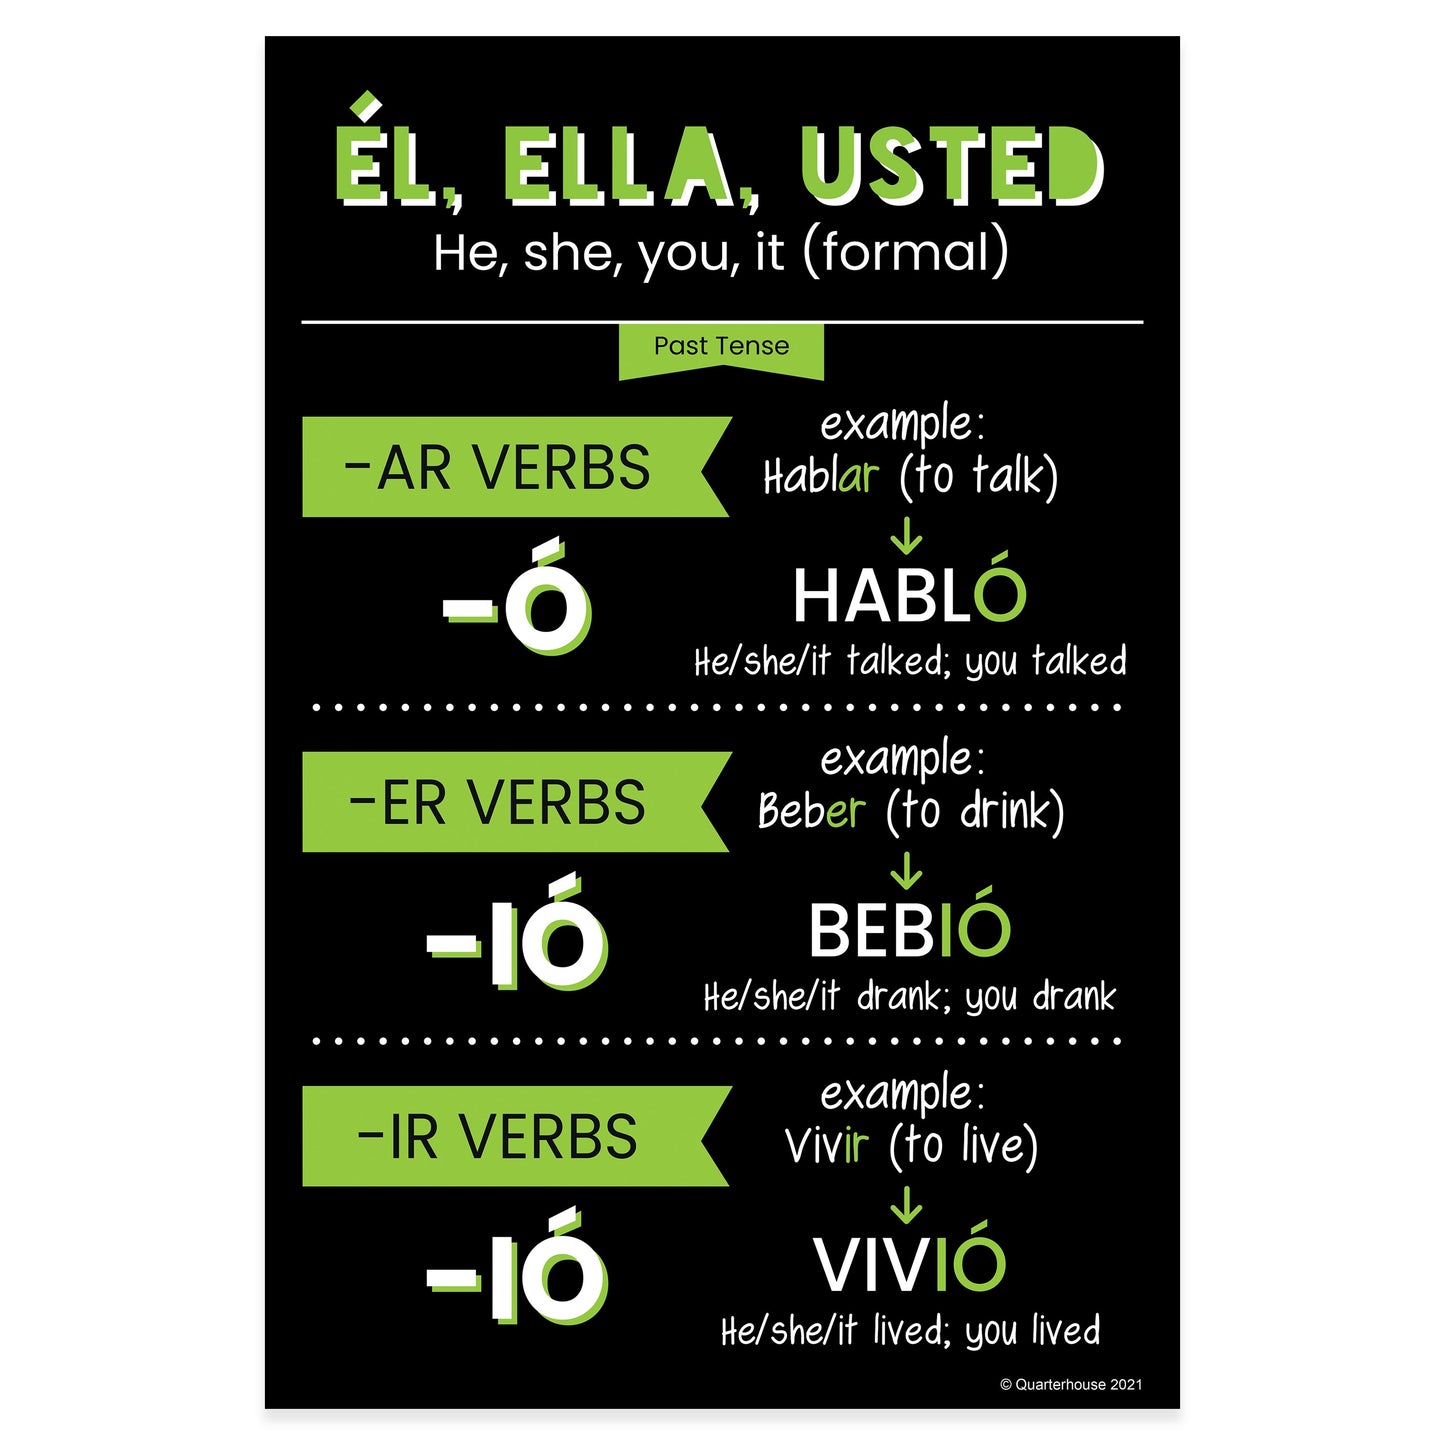 Quarterhouse Él, Ella, Usted - Past Tense Spanish Verb Conjugation (Dark-Themed) Poster, Spanish and ESL Classroom Materials for Teachers